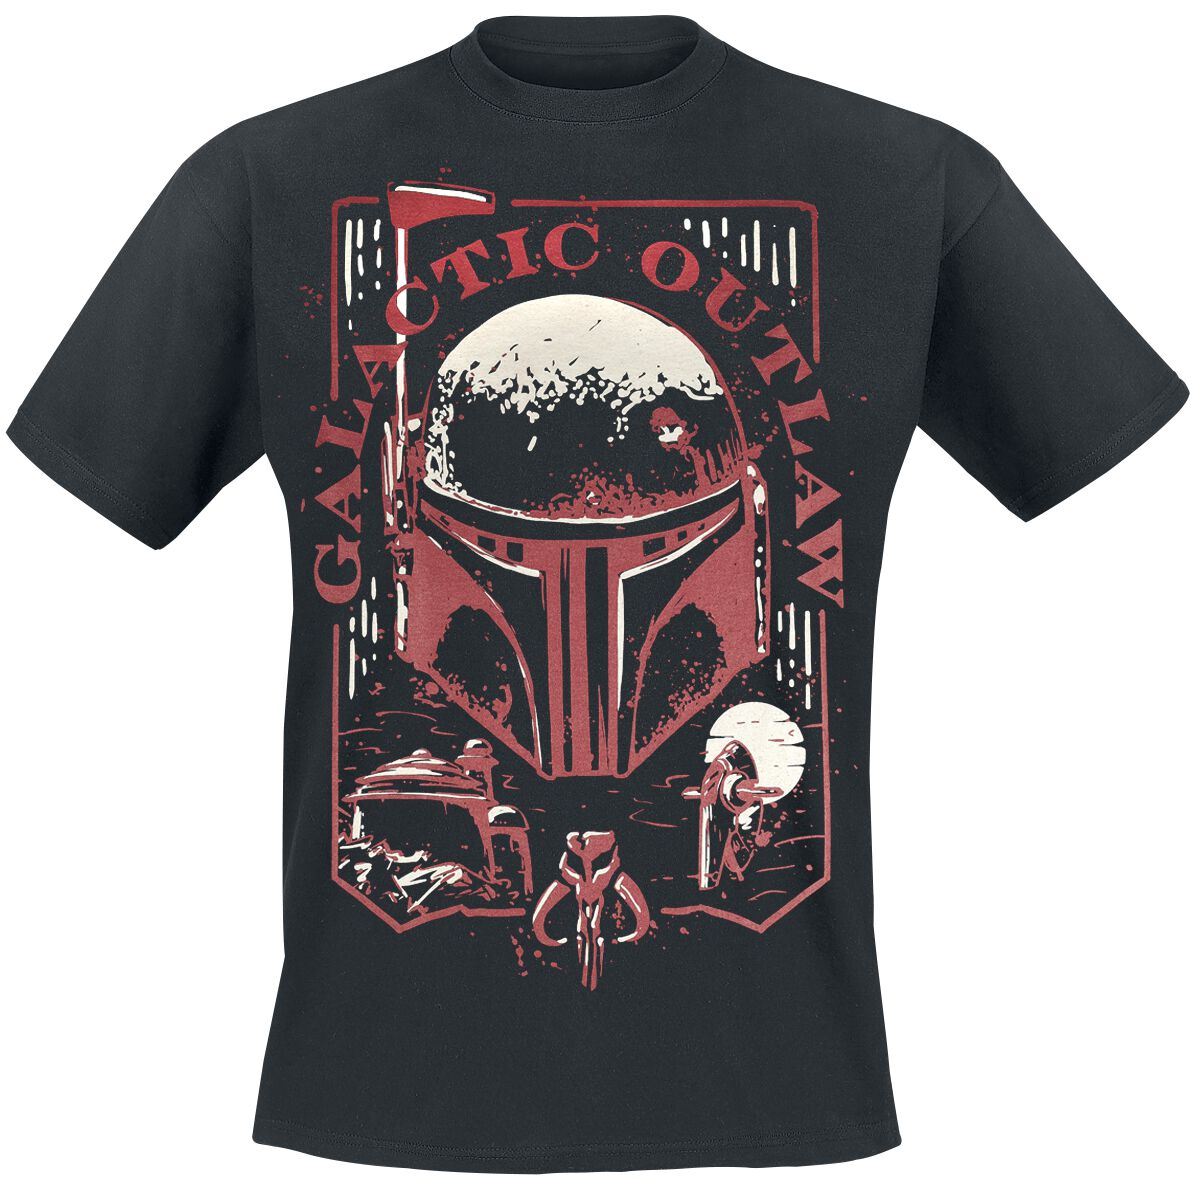 Star Wars The Book Of Boba Fett - Galactic Outlaw T-Shirt schwarz in XL